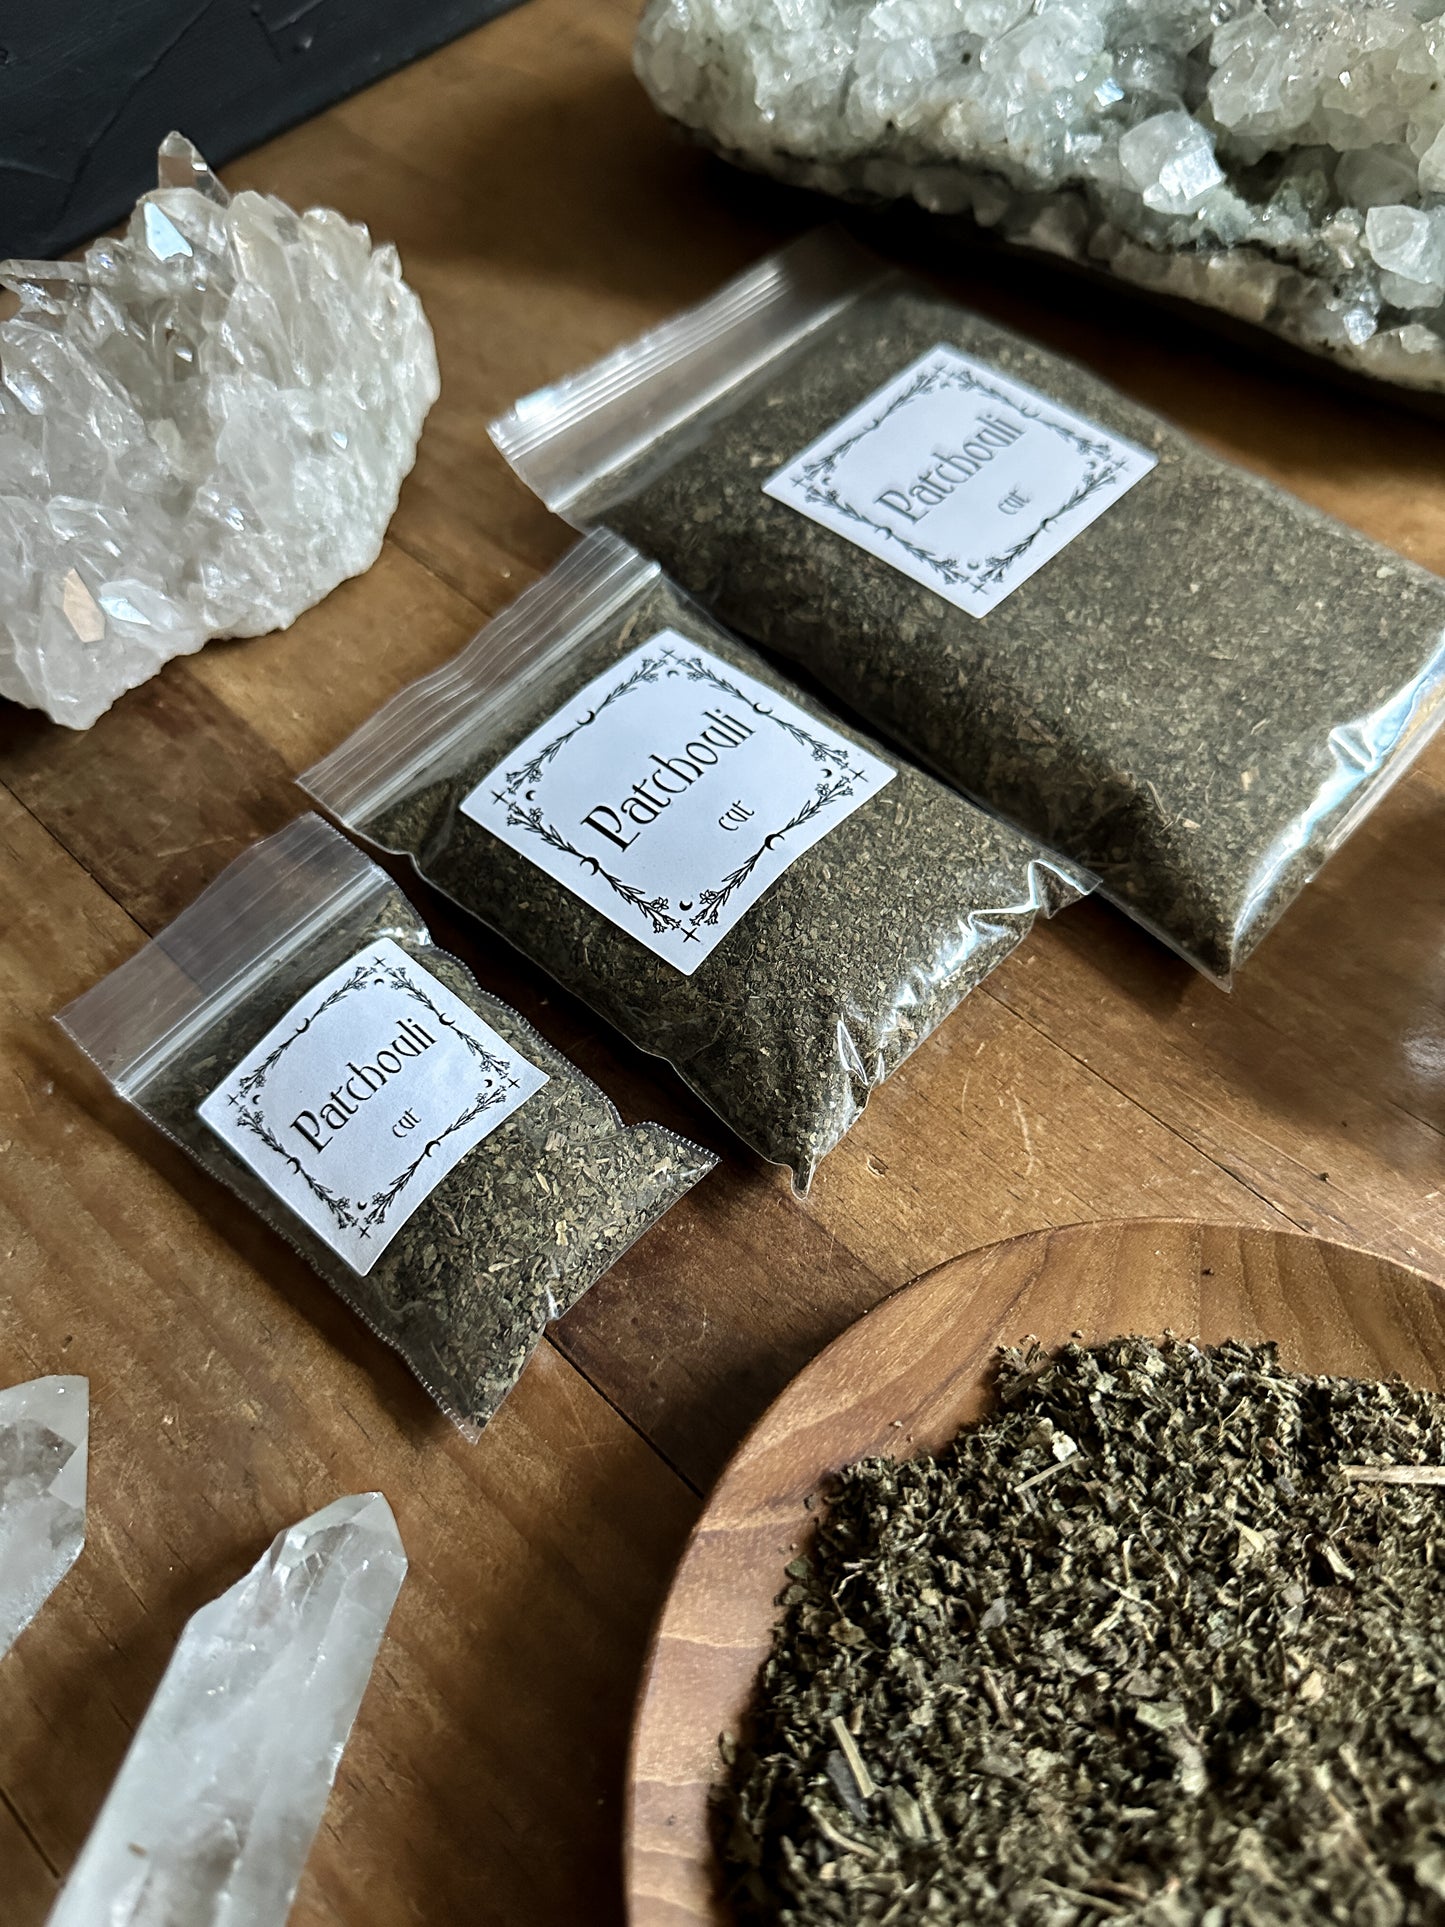 Patchouli - Ritual Herbs